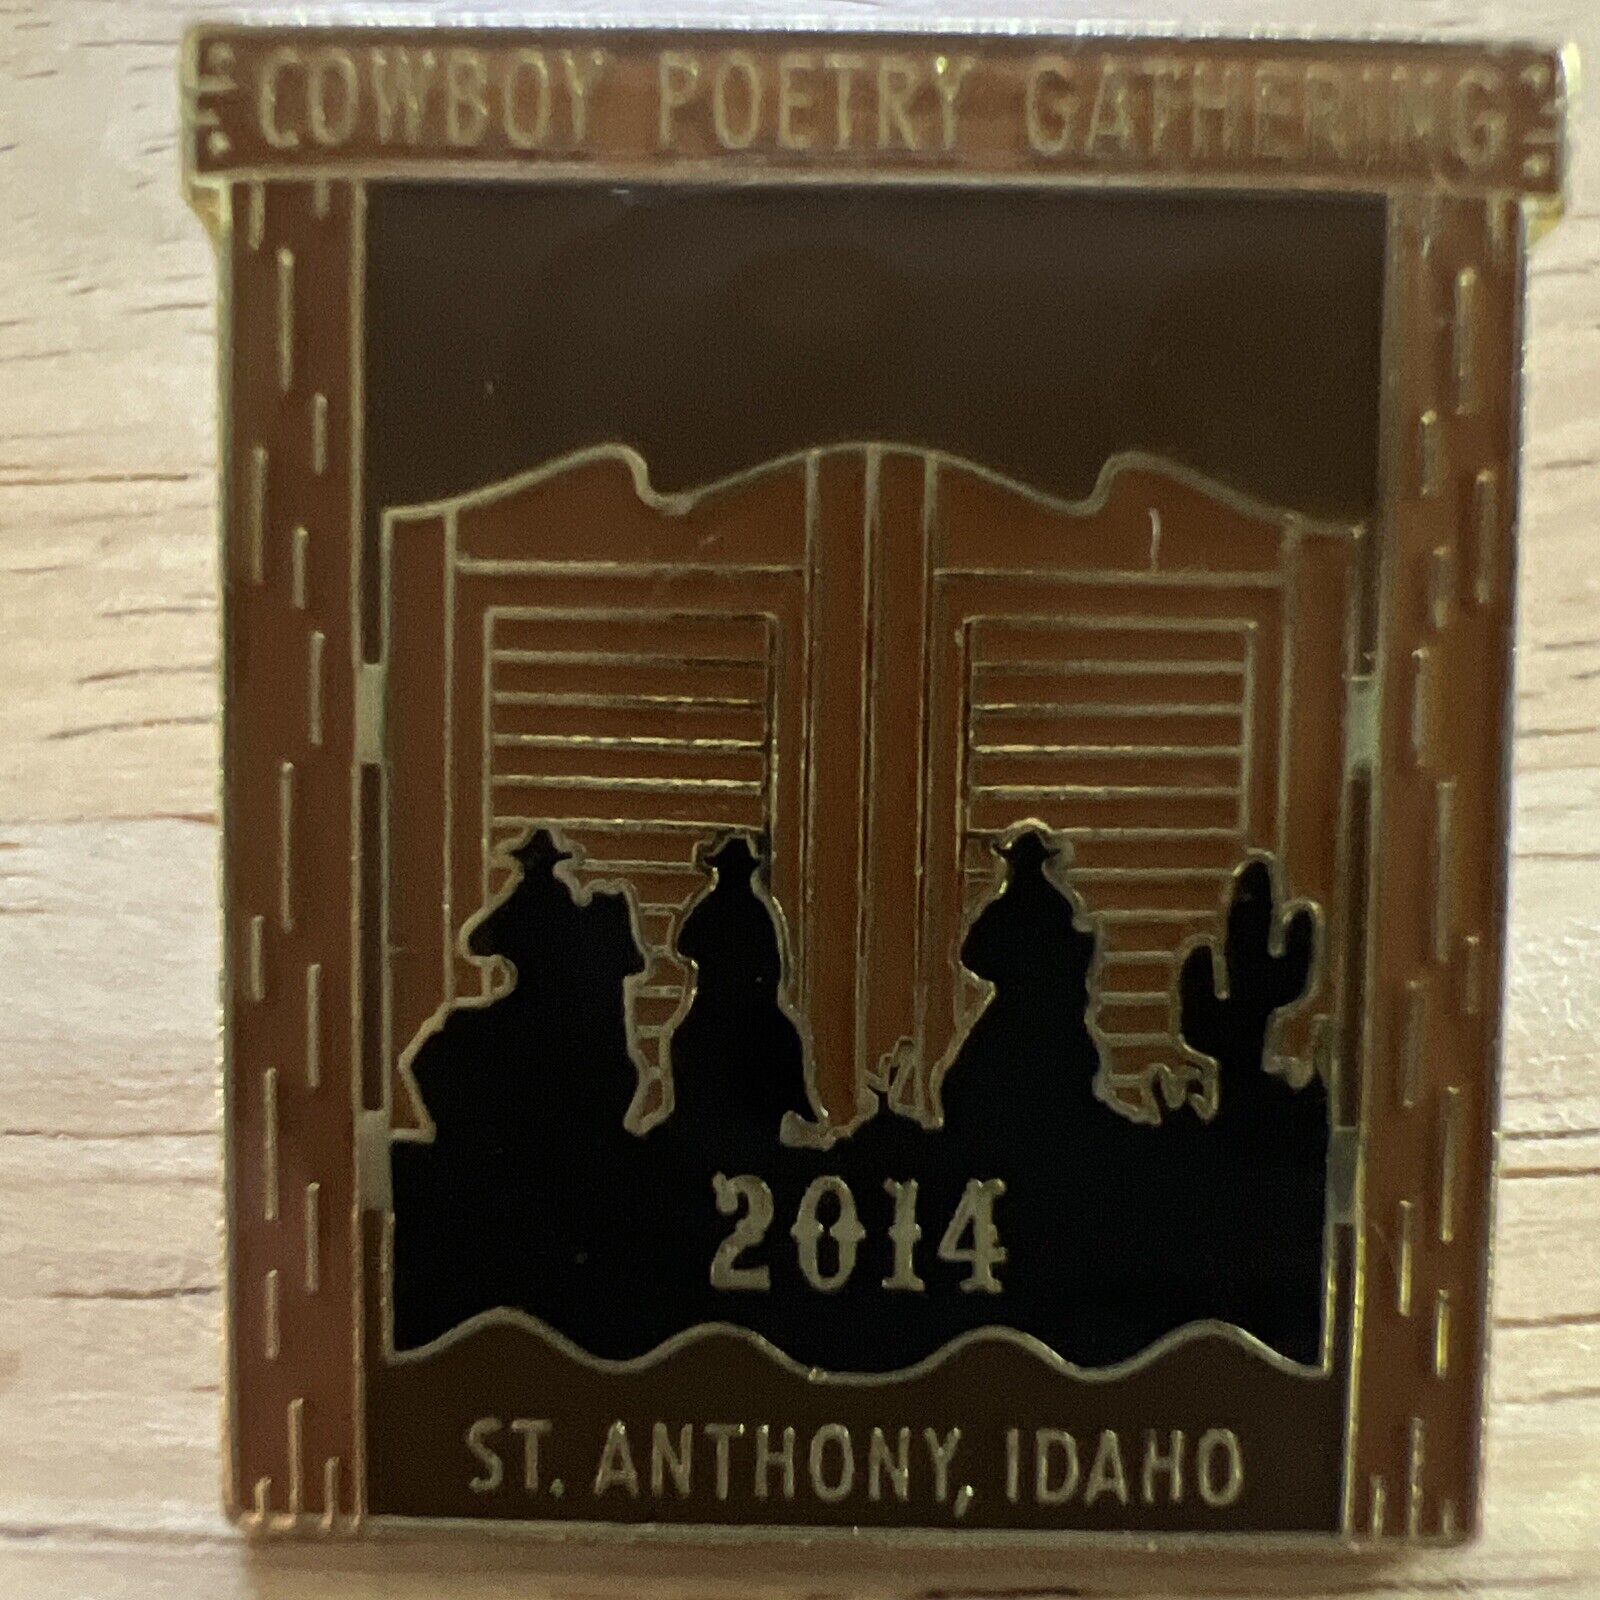 2014 ST. Anthony Idaho. Cowboy Poetry. Pin Back